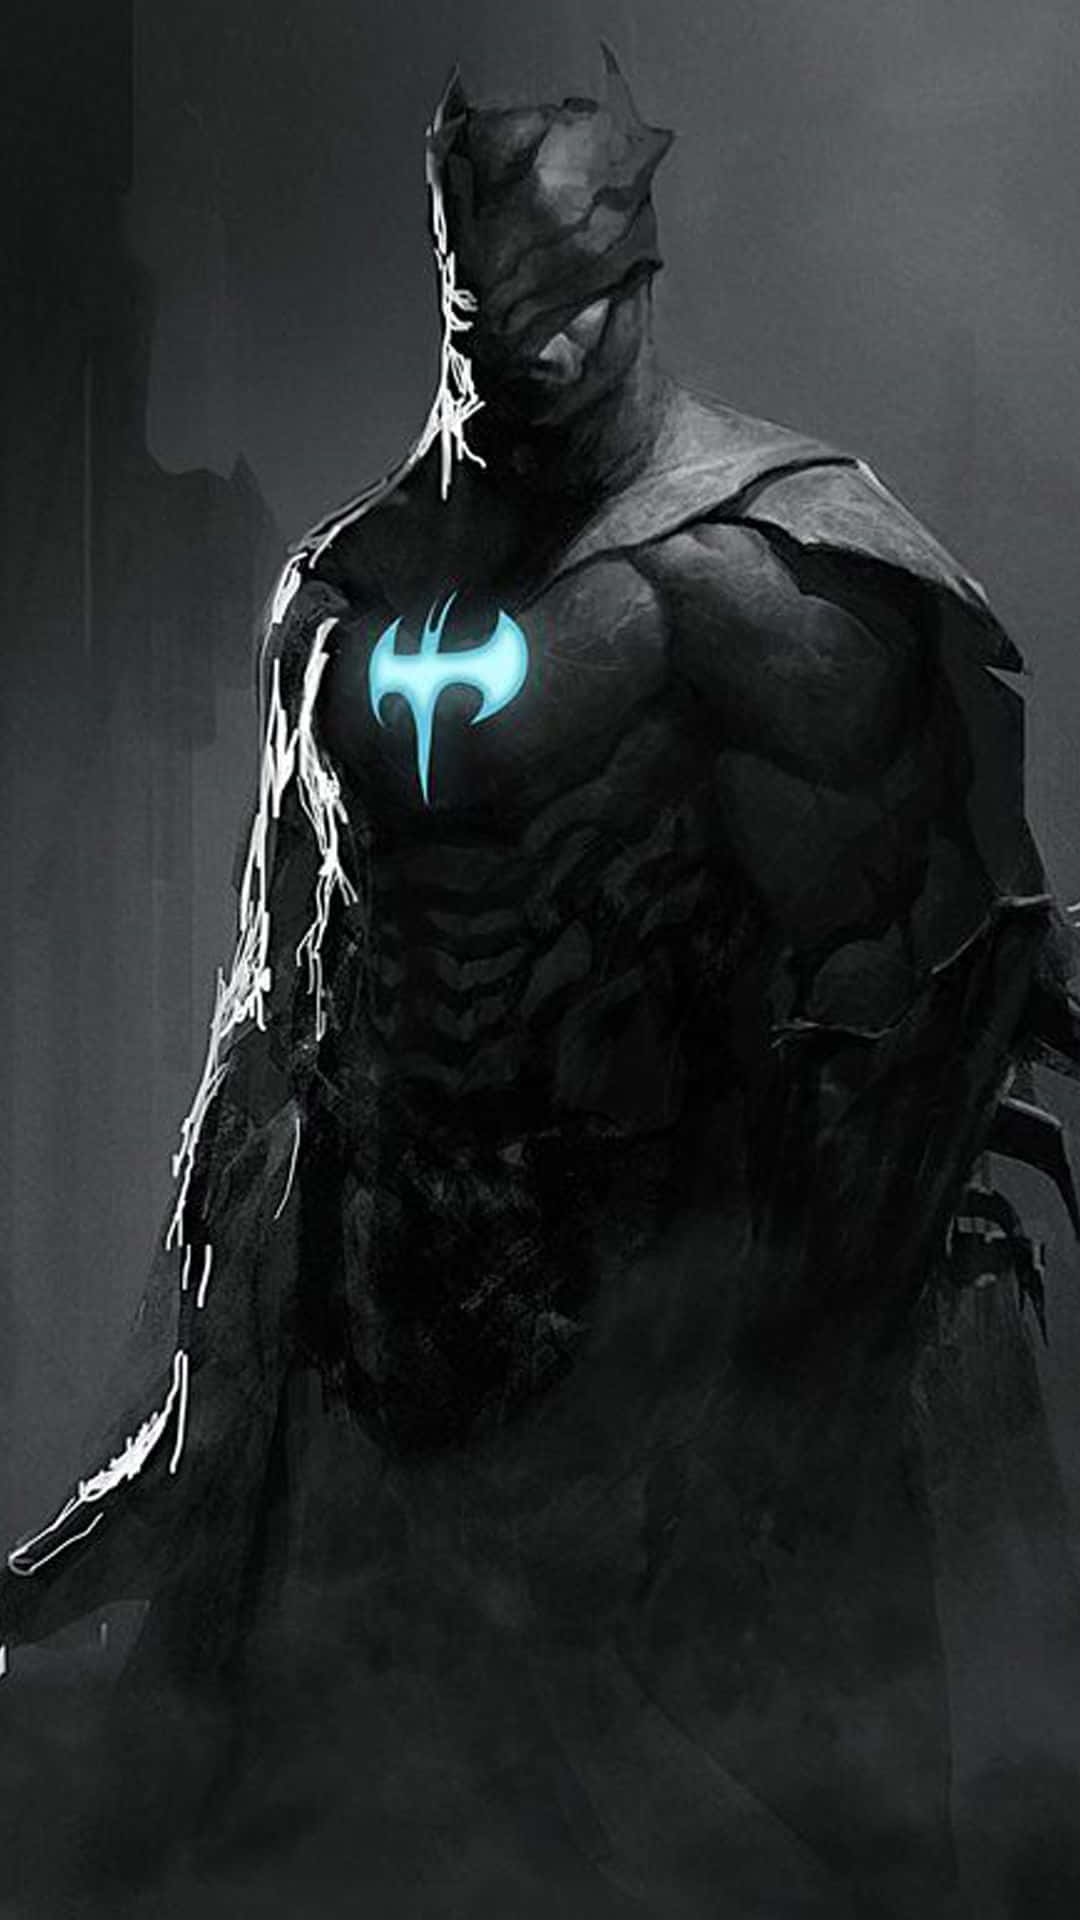 Wallpaper background, Batman, Batman, Arkham Knight for mobile and